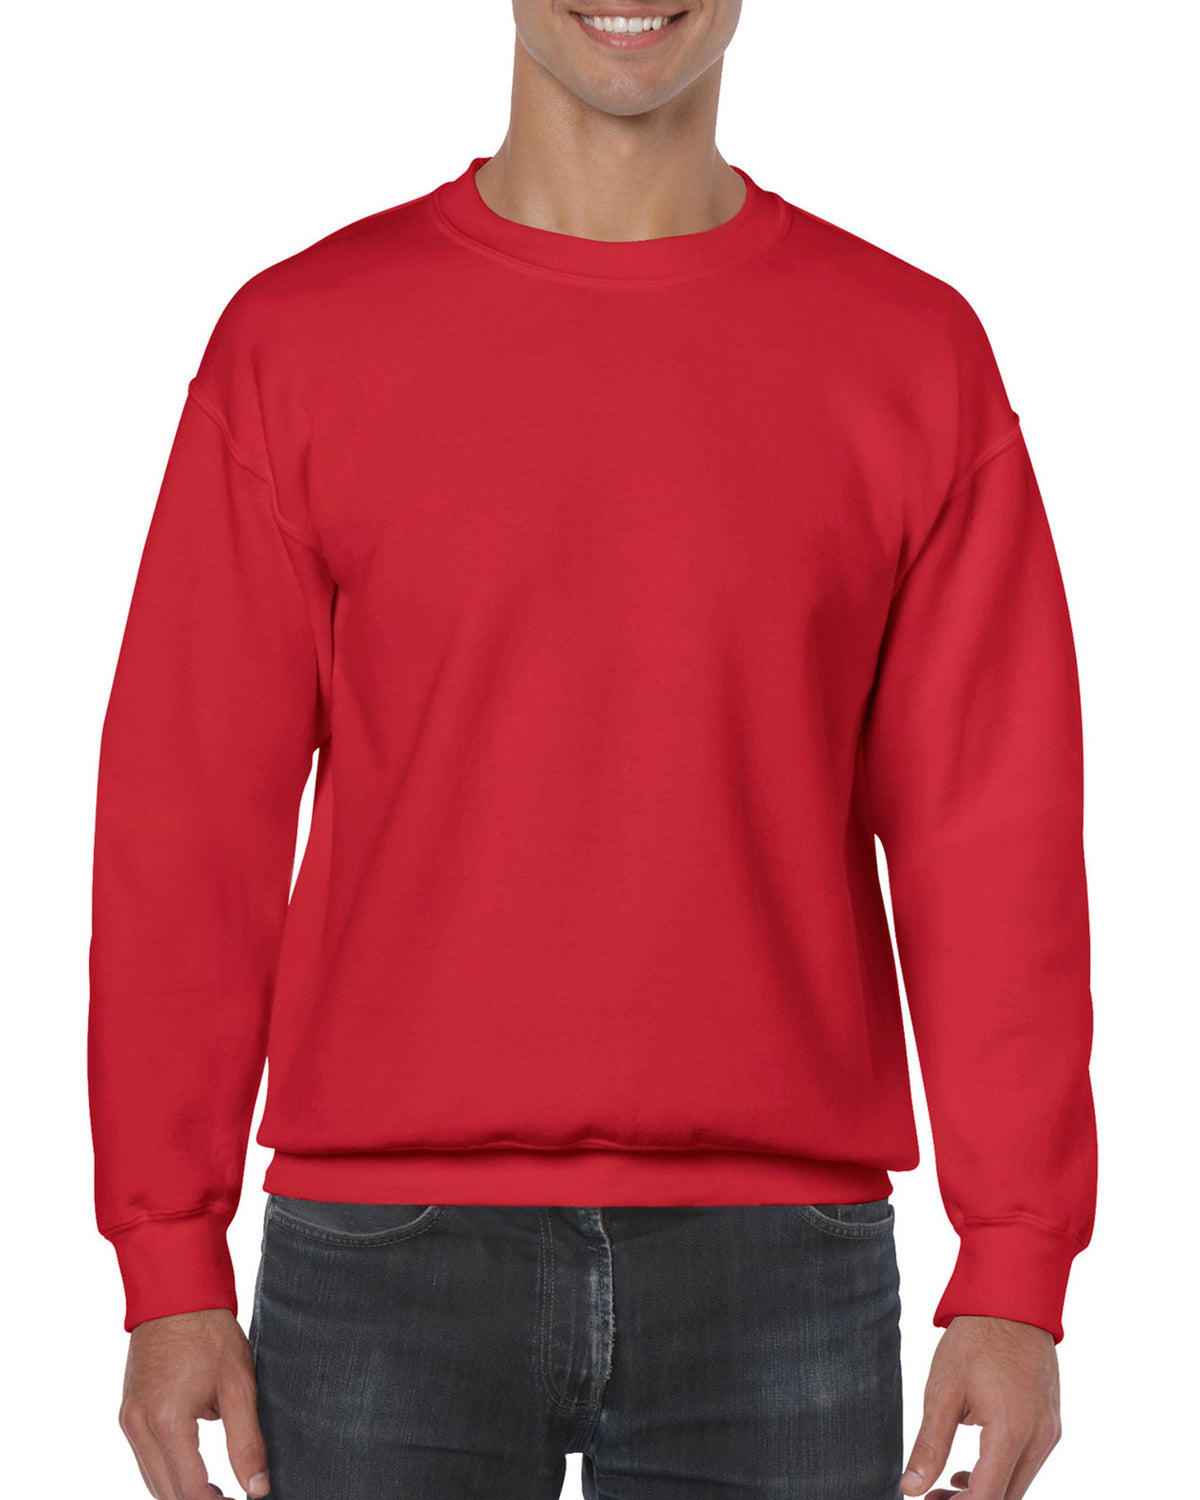 Red Adult Crewneck Sweatshirt